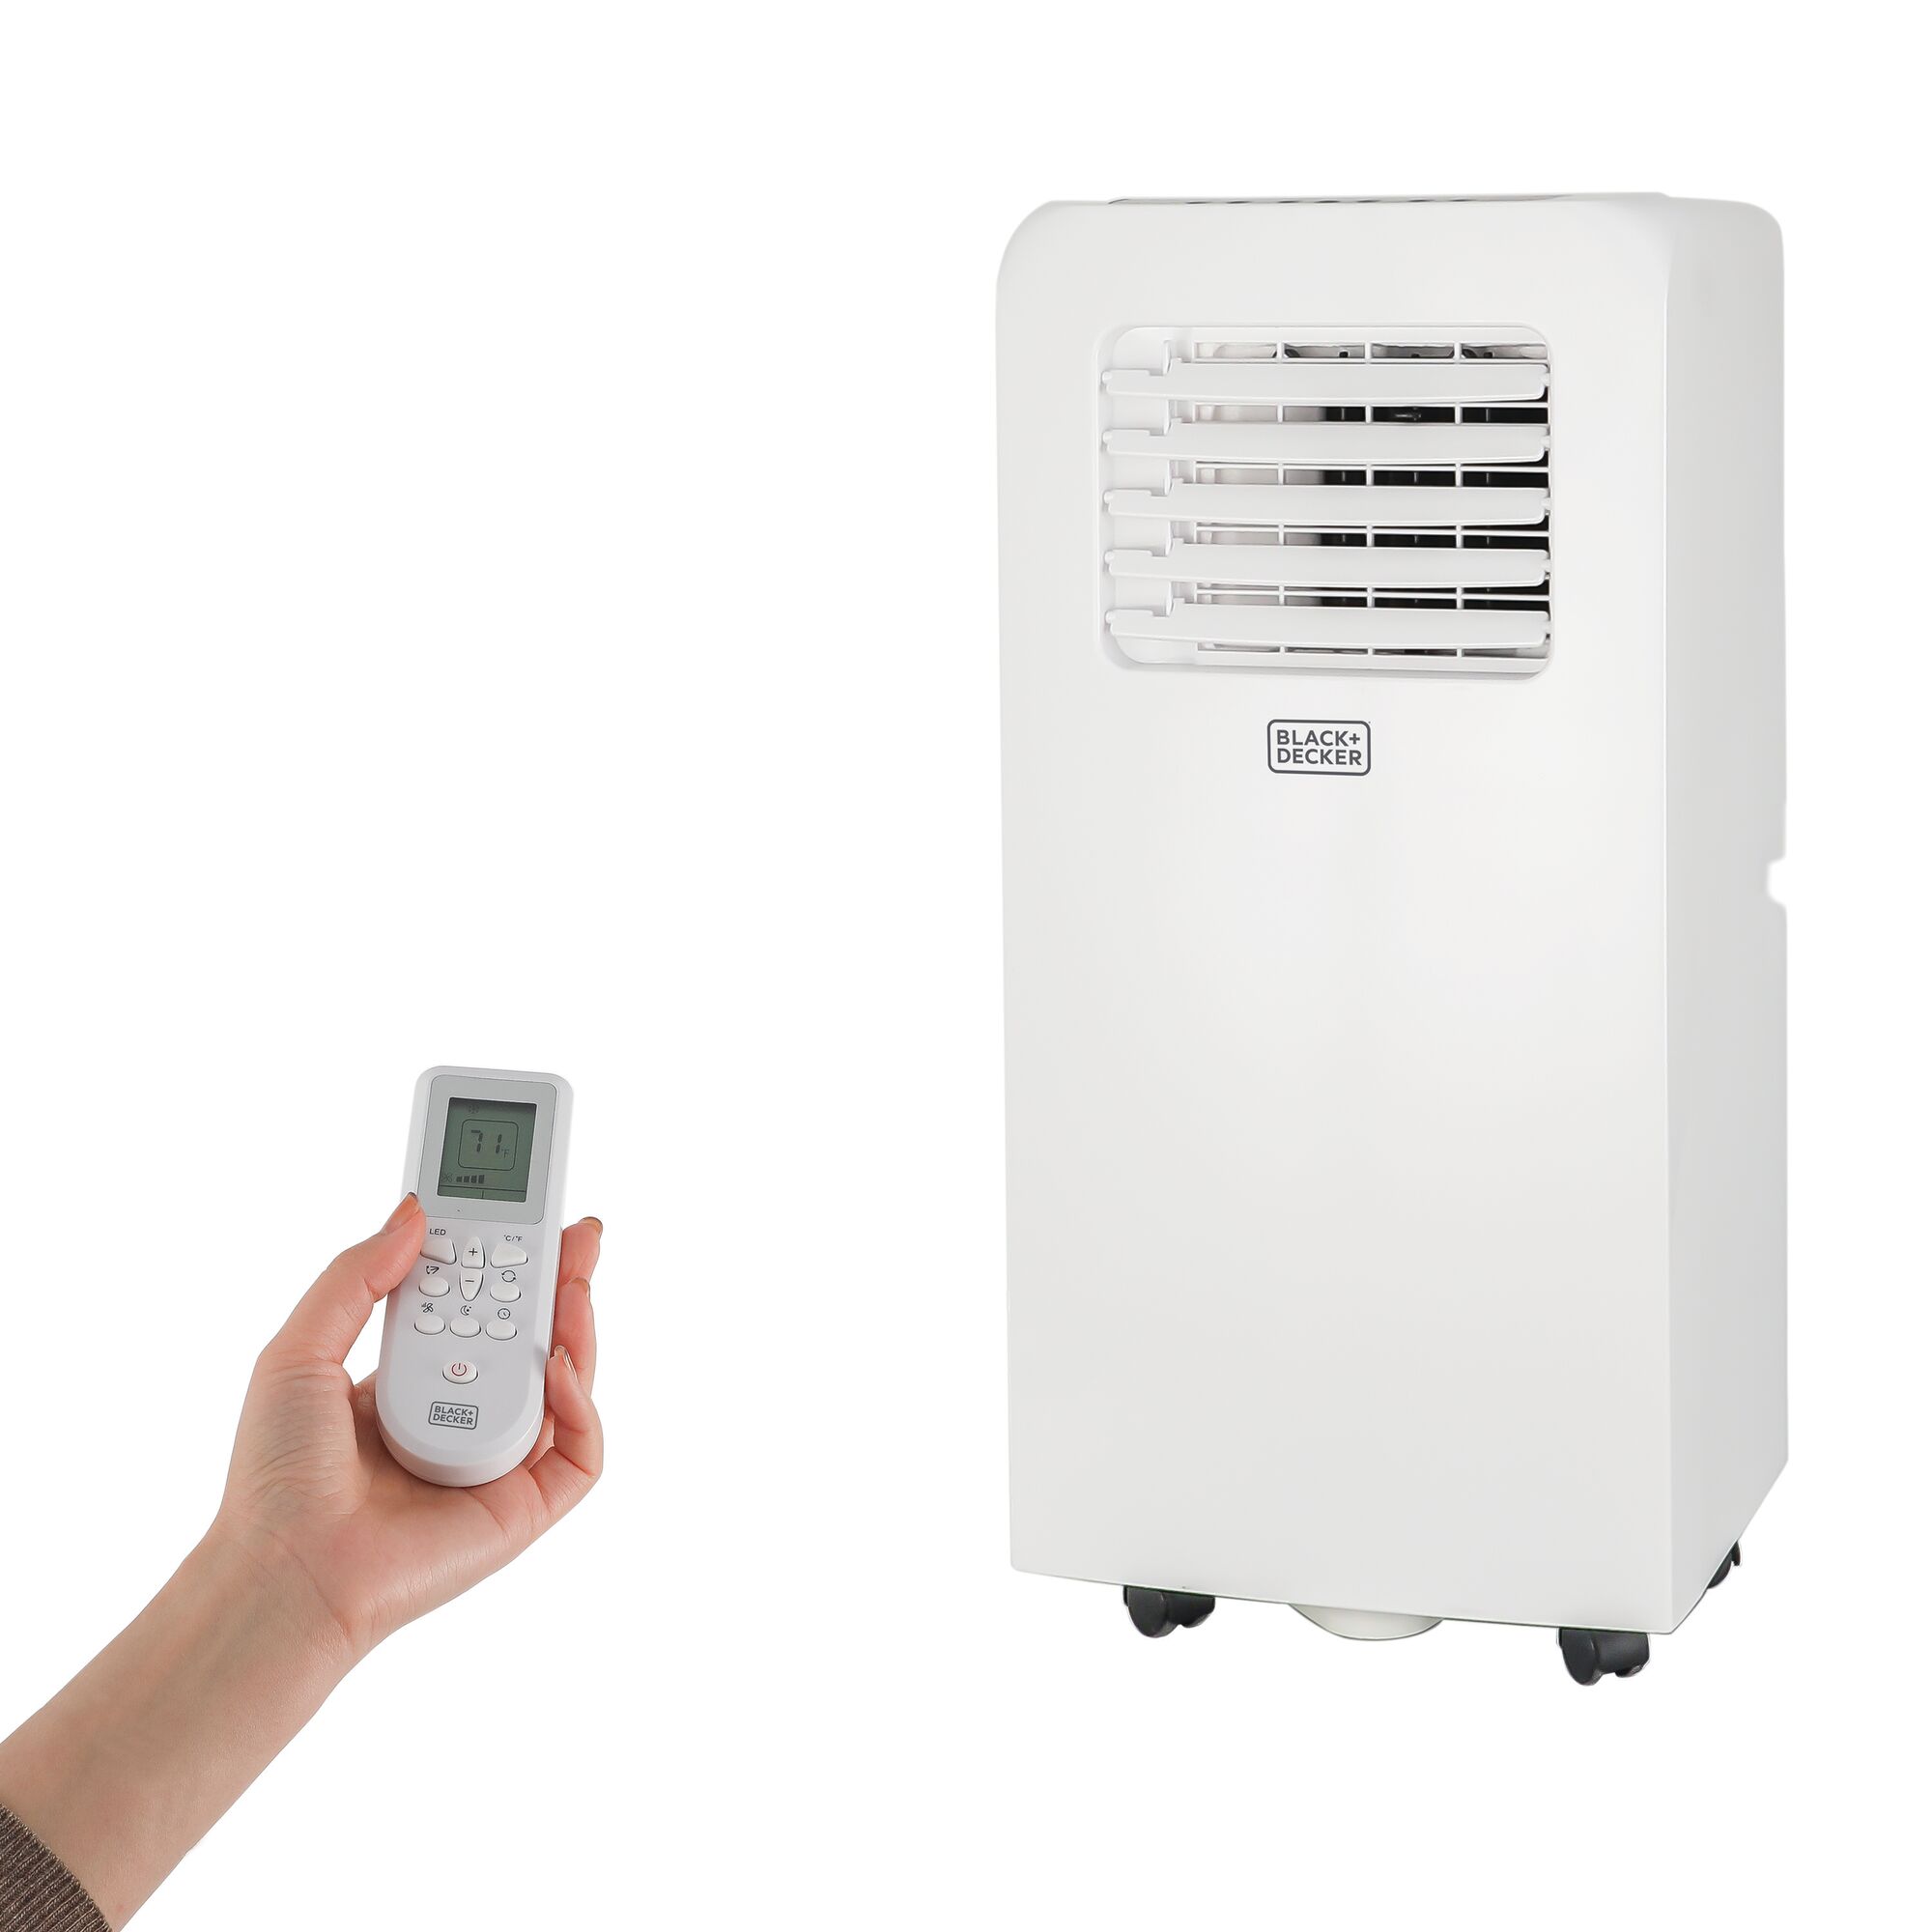 Portable Air Conditioner and remote